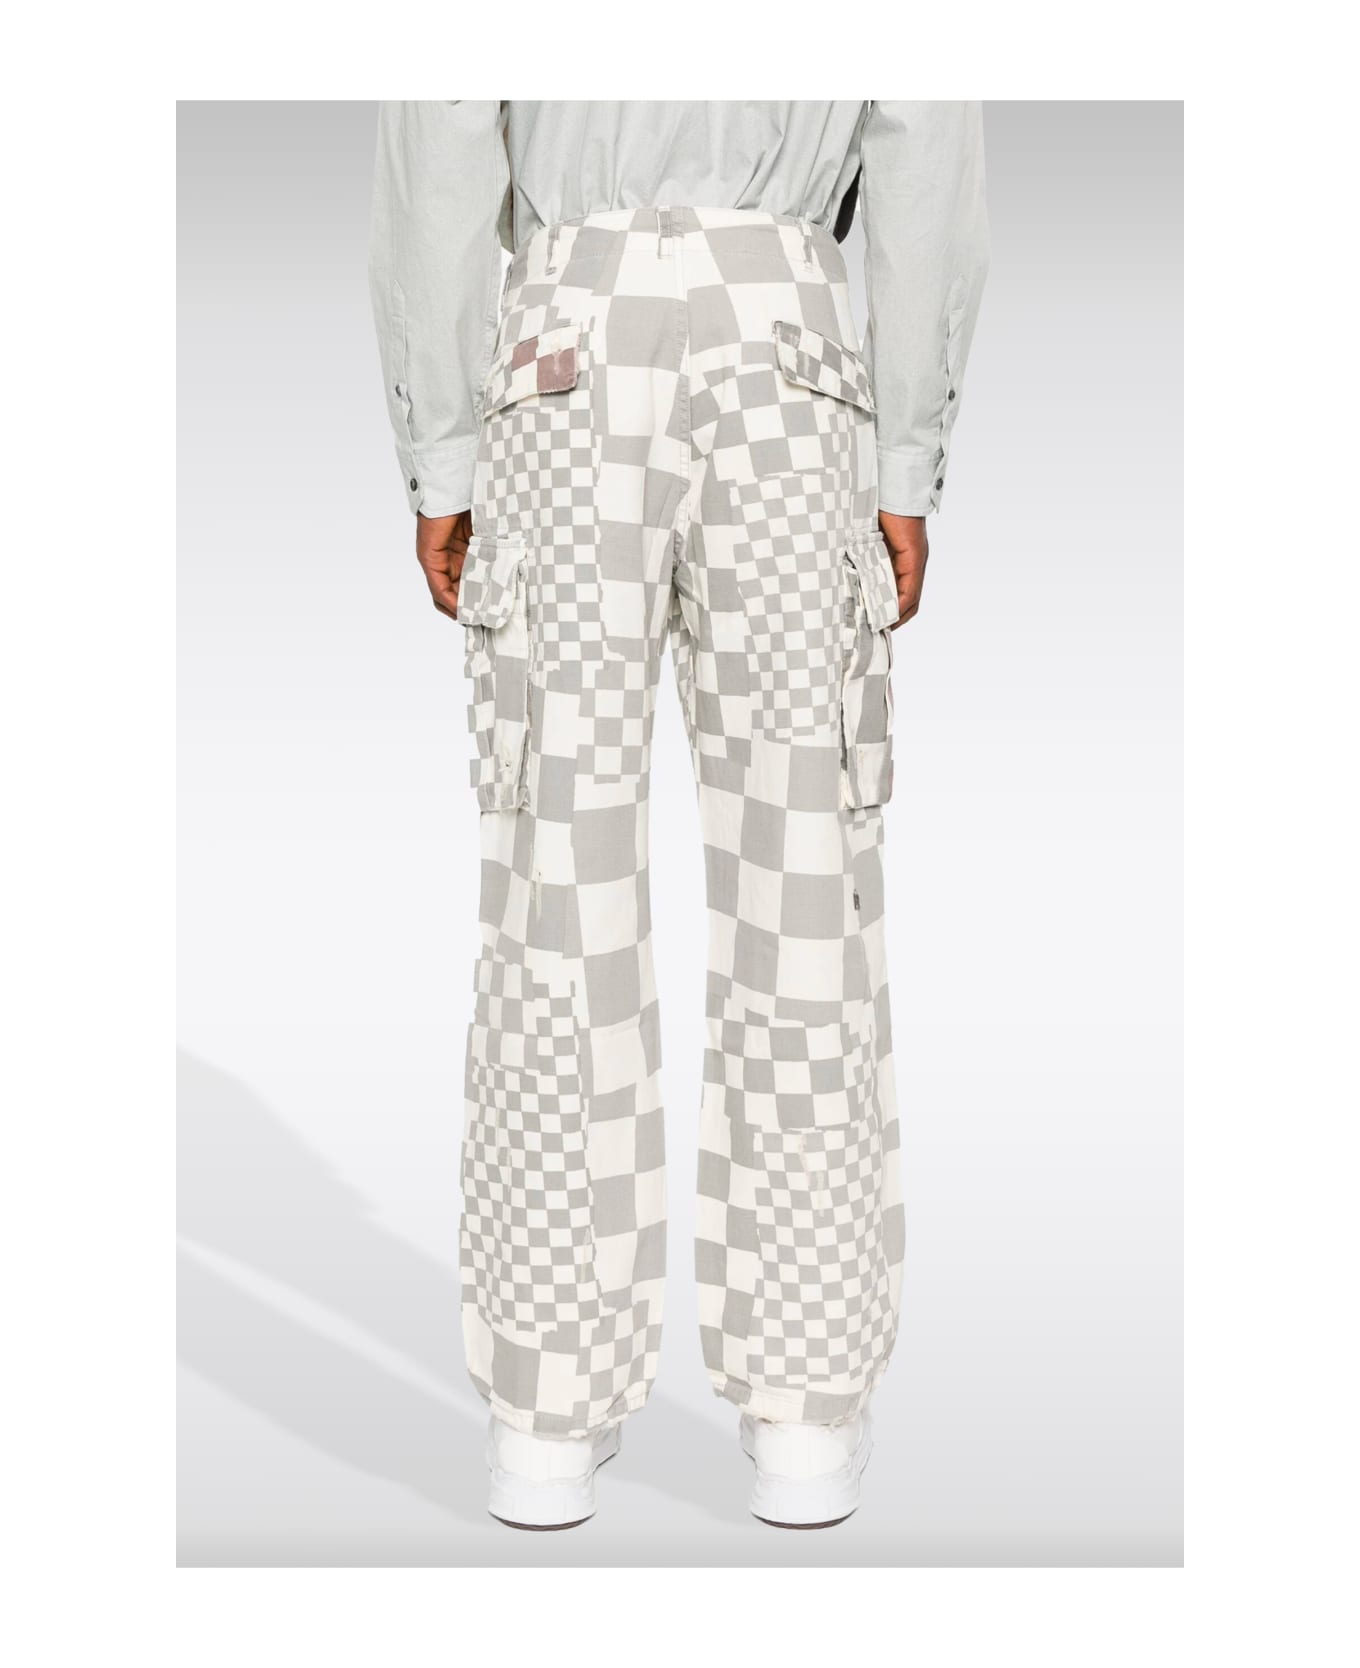 ERL Unisex Printed Cargo Pants Woven White/grey checked cotton cargo pants - Unisex Printed Cargo Pants Woven - Bianco/grigio